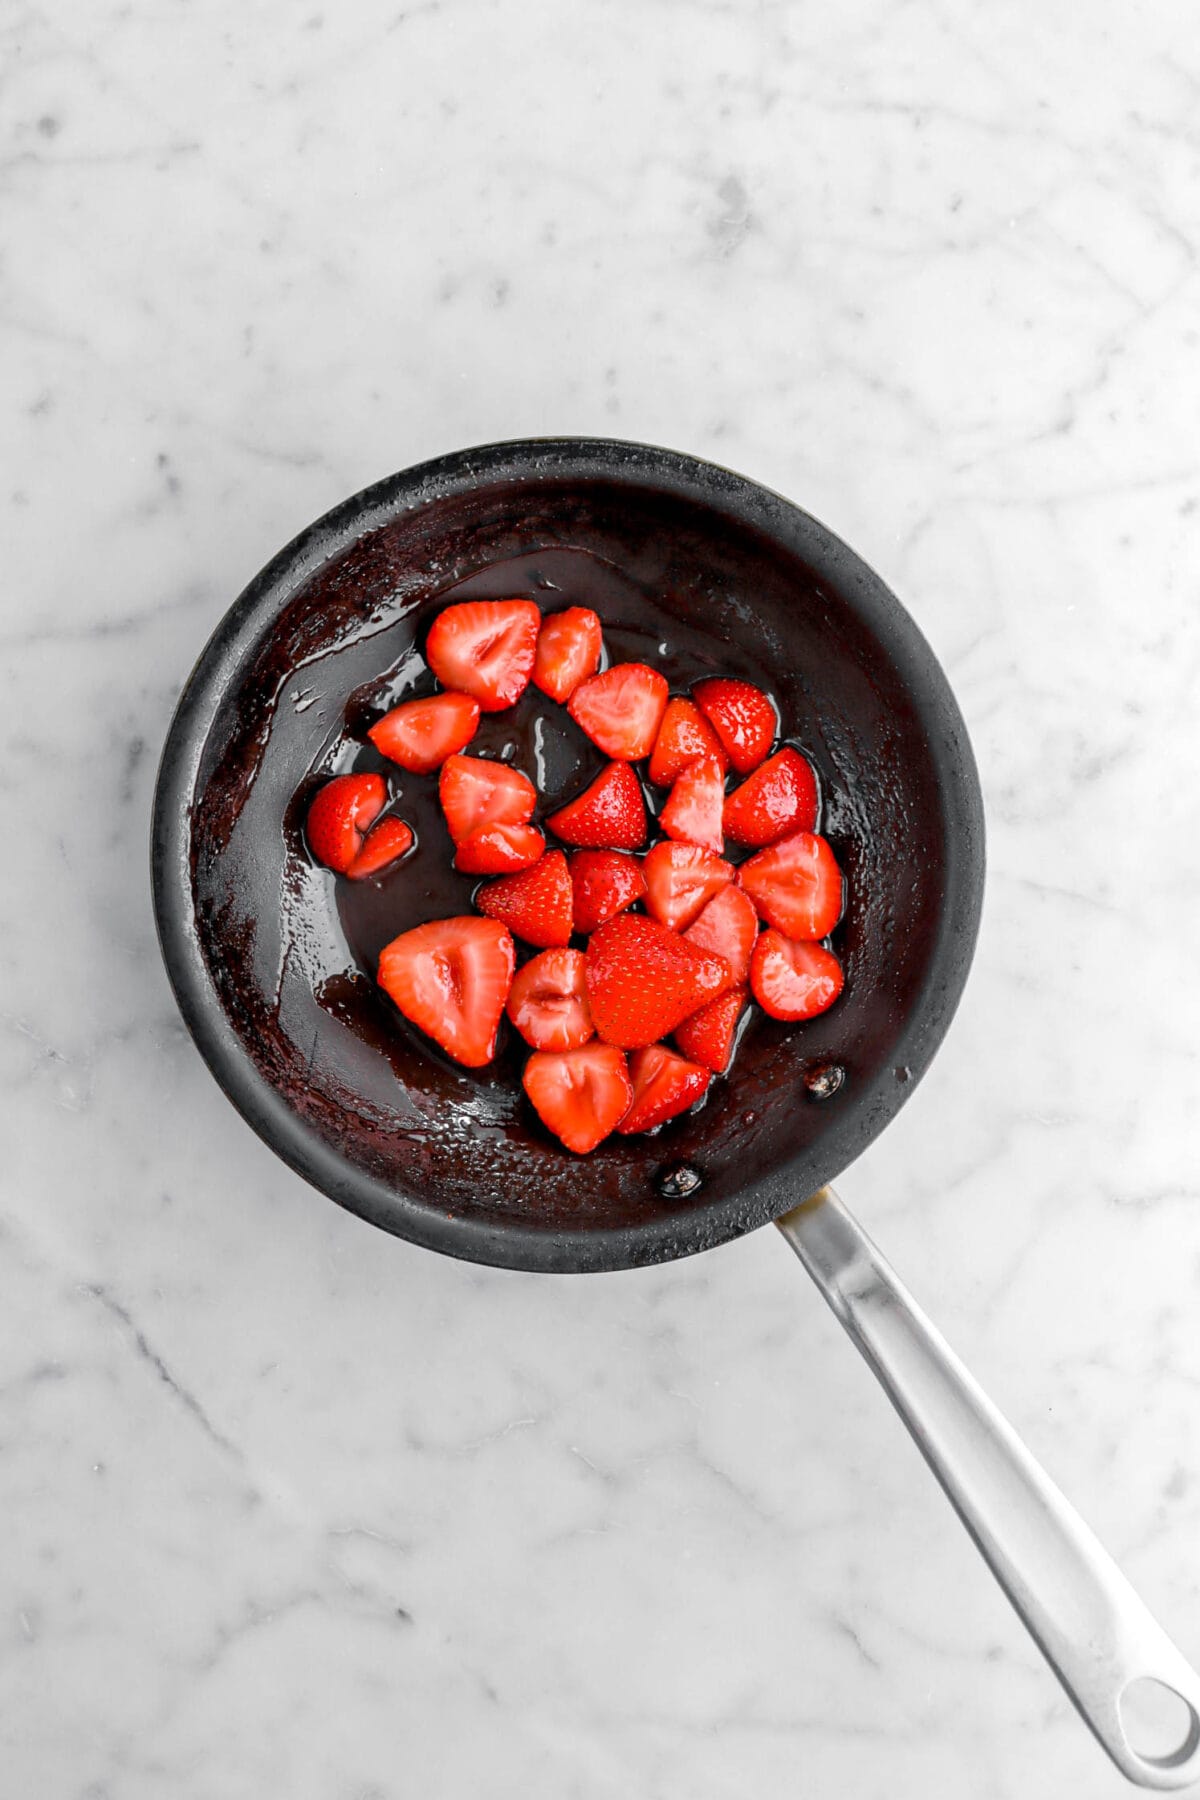 Sautéed strawberries in small skillet.